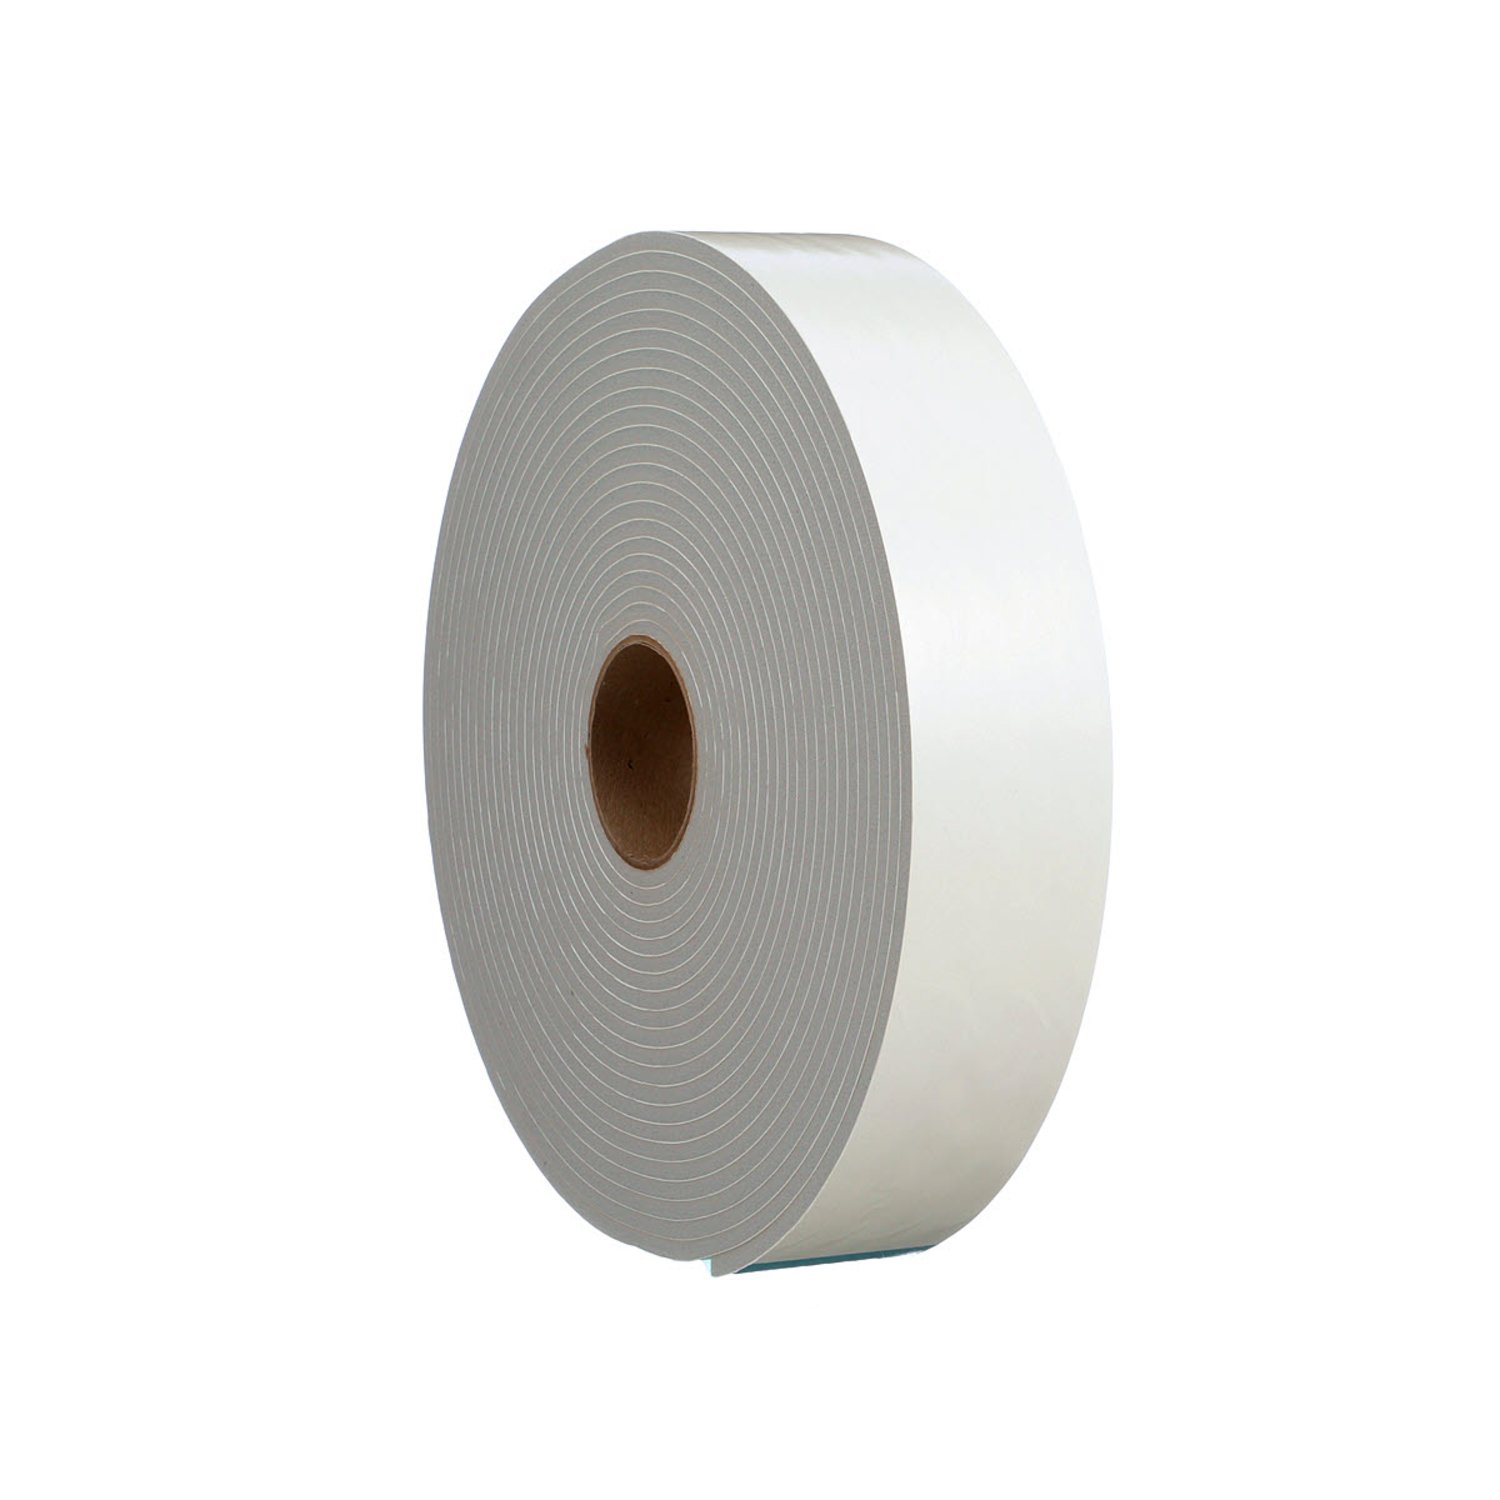 7100043822 - 3M Venture Tape Vinyl Foam Tape 1714, Gray, 3 in x 50 ft, 250 mil, 4
rolls per case